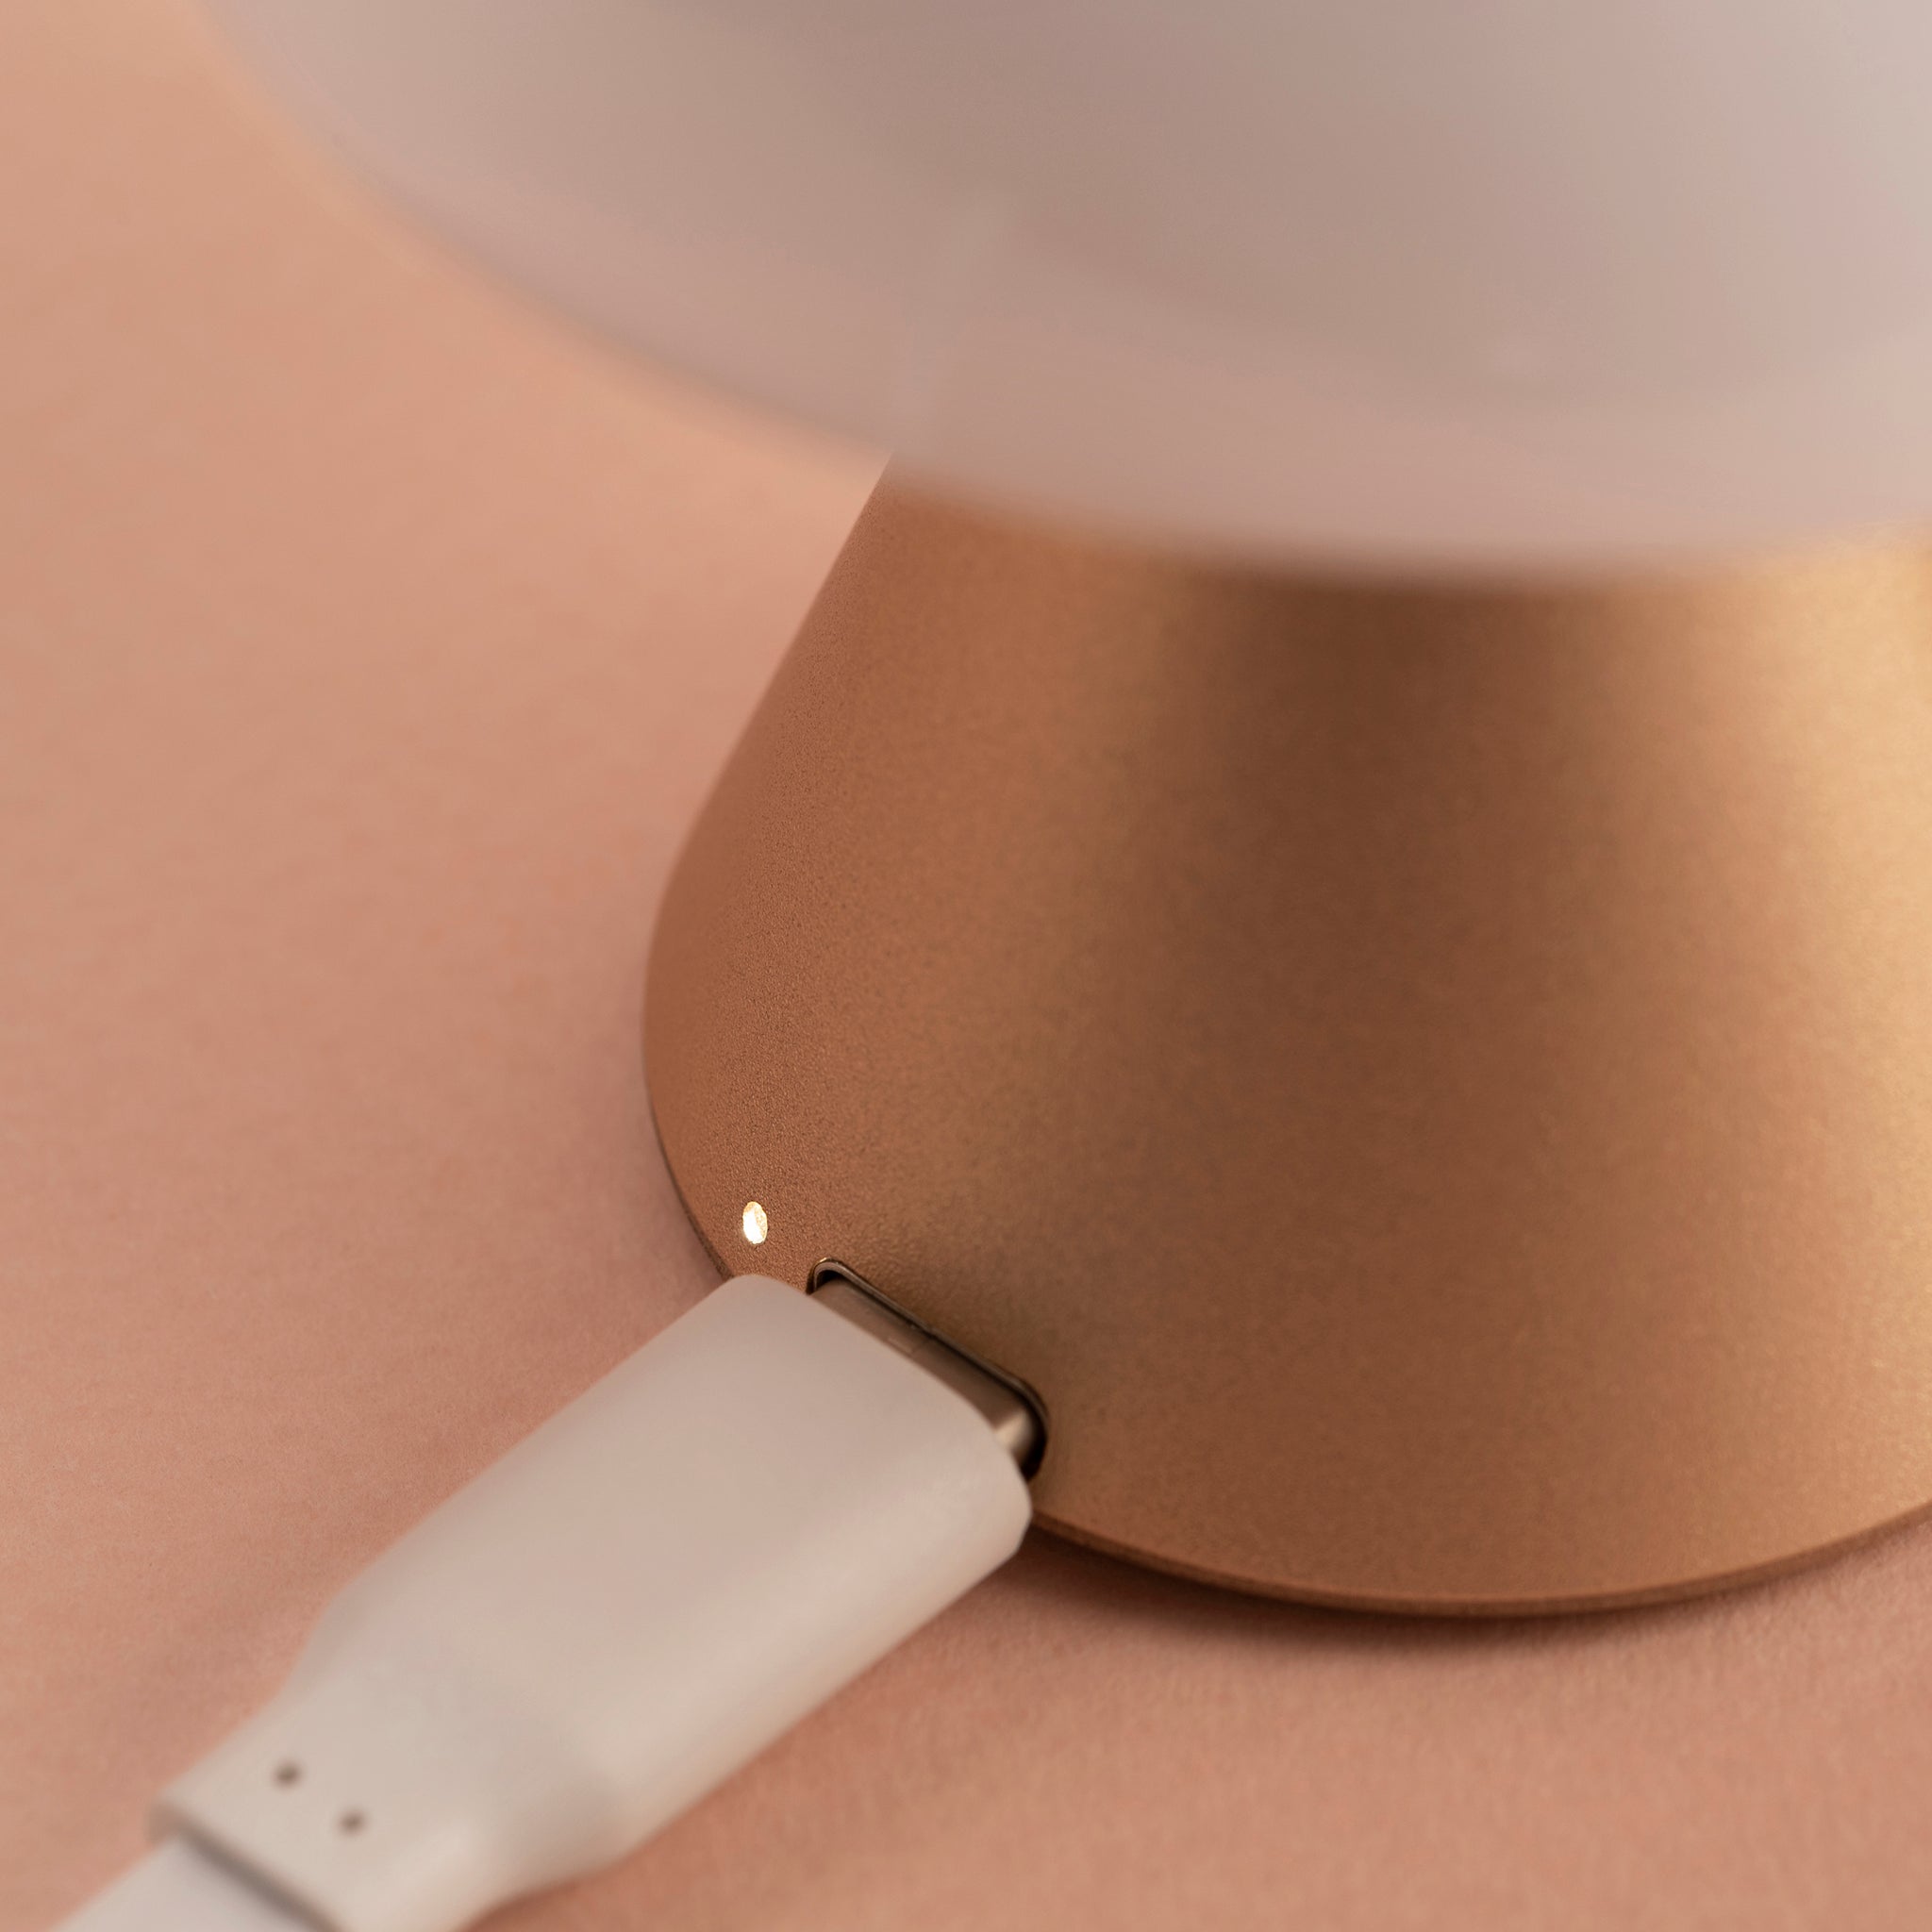 Lexon Mina Small Soft Gold│Oplaadbare LED lamp│art. LH60MD│detail USB-kabel en oplaadlichtje